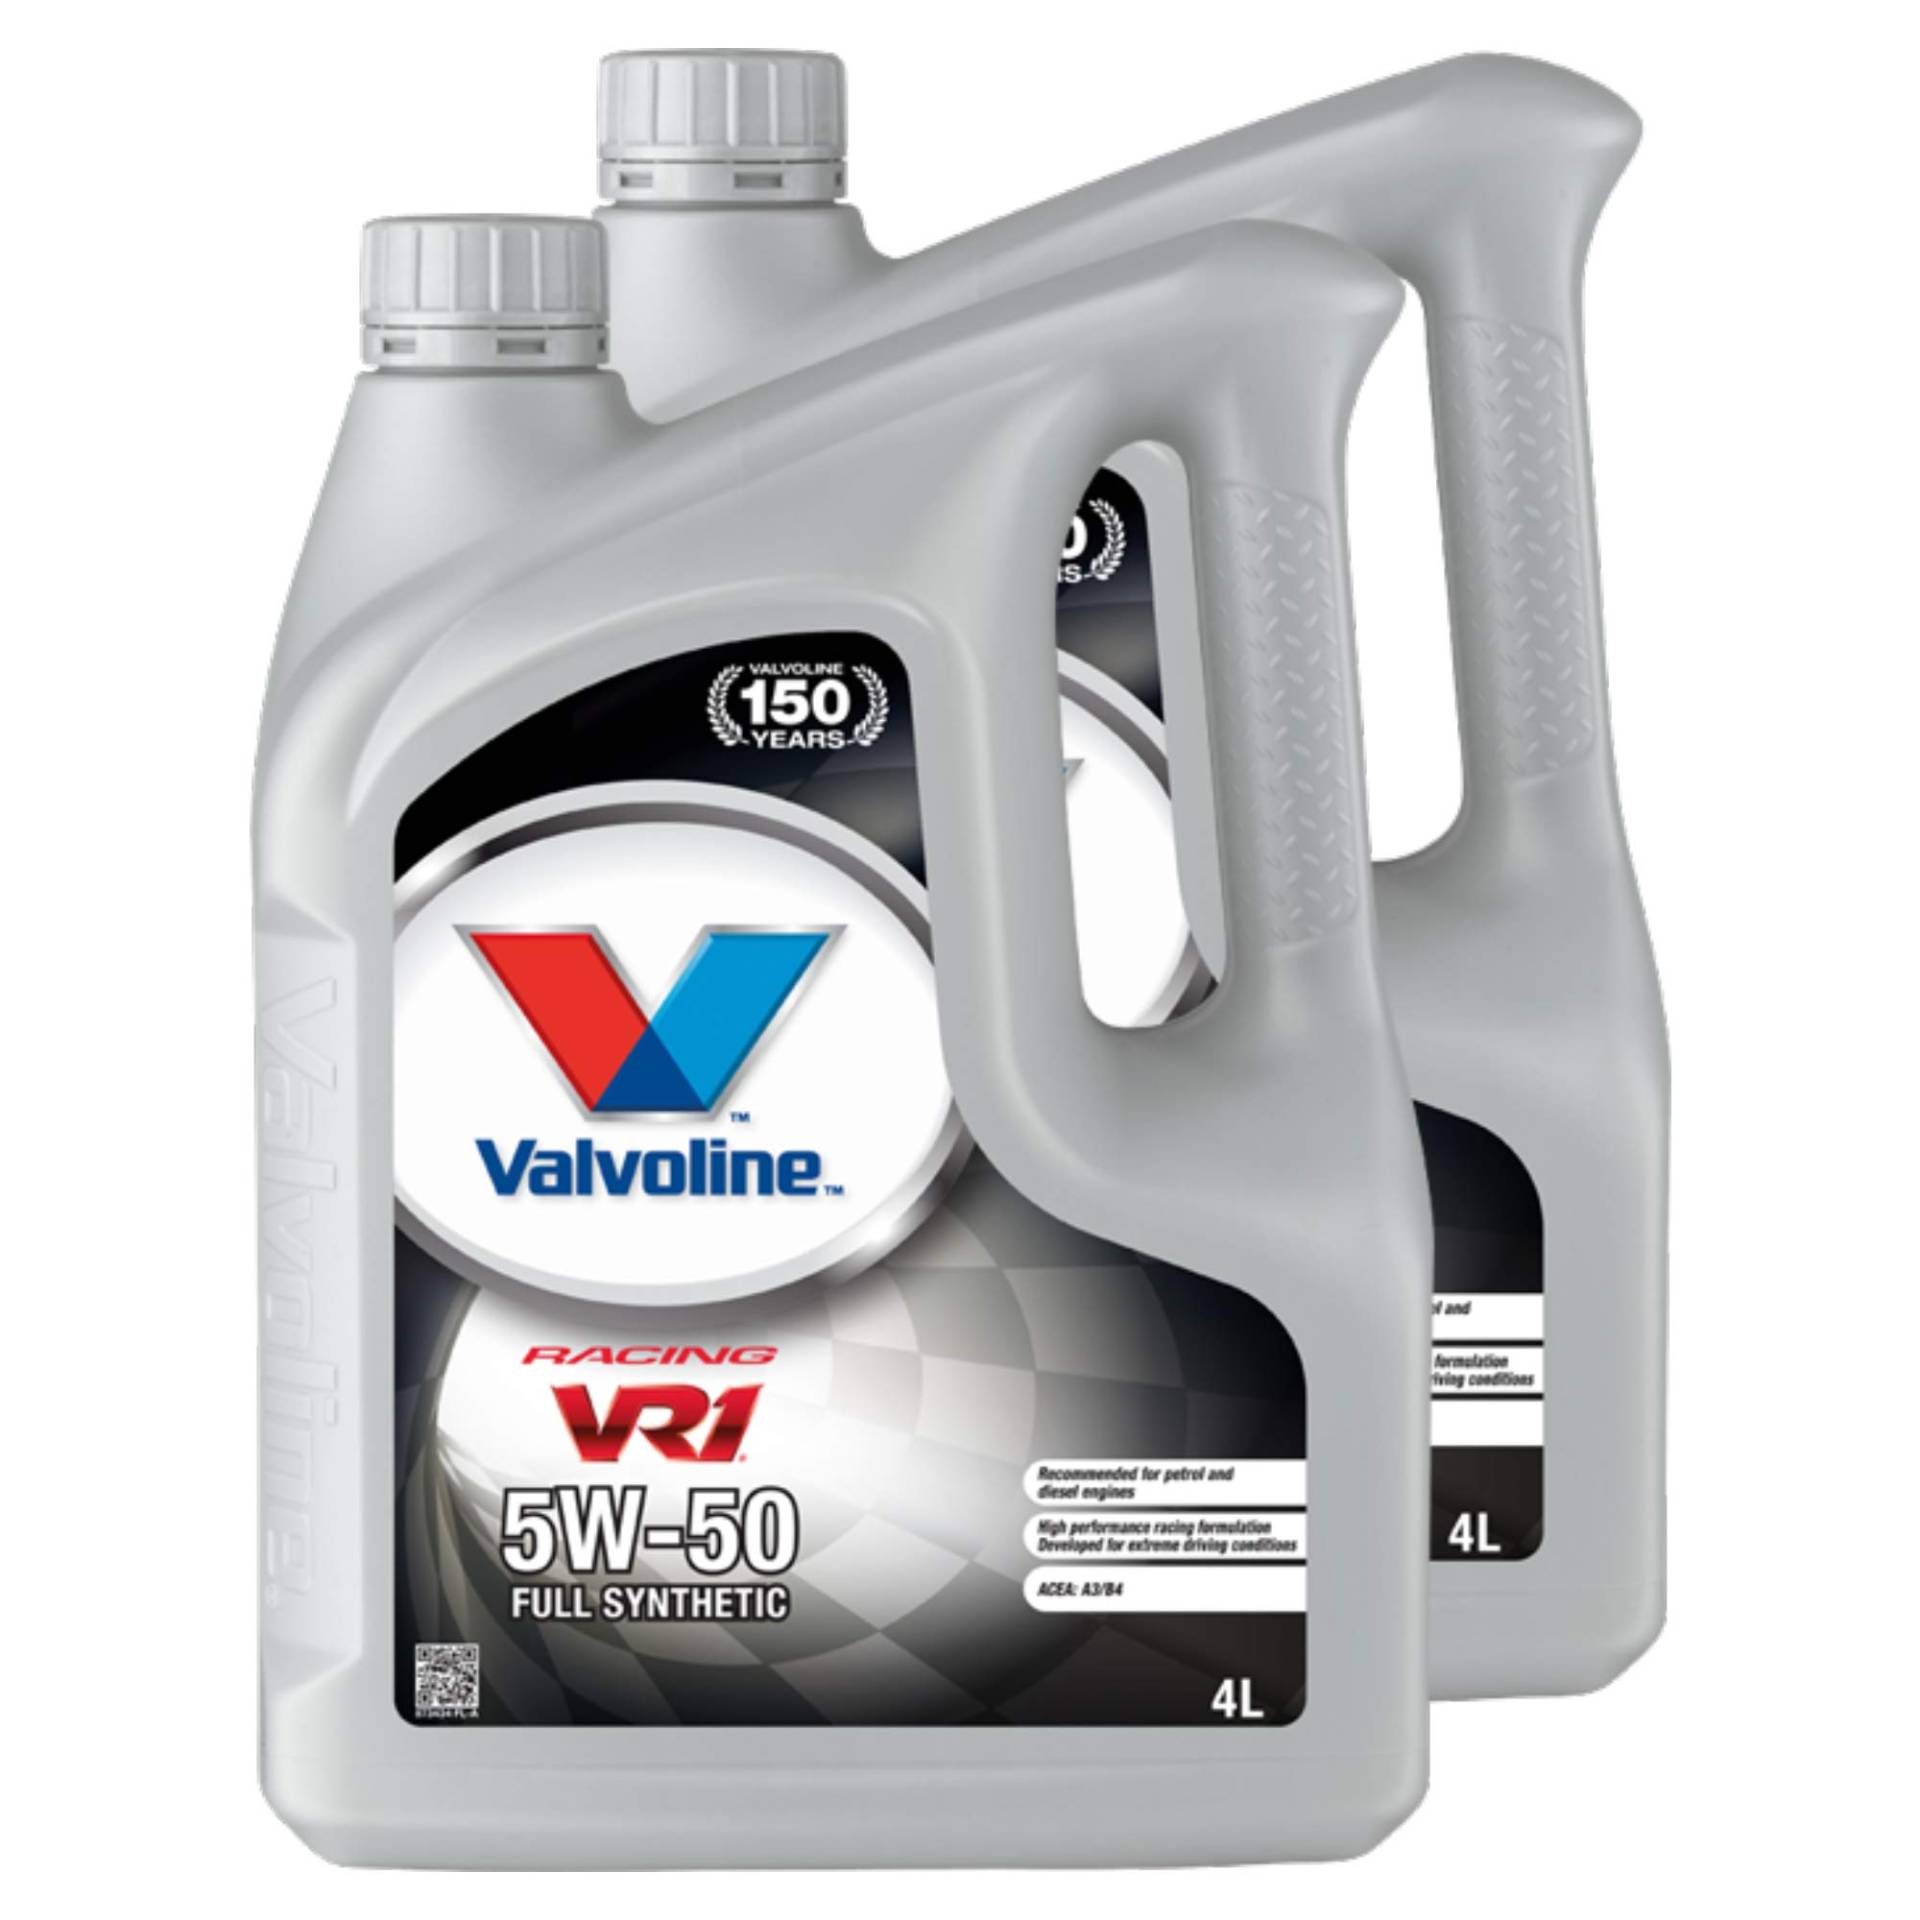 Valvoline 2X Motoröl Motorenöl Motor Motoren Öl Motor Engine Oil Benzin Vr1 Racing 5W-50 Rallye 4L von Valvoline